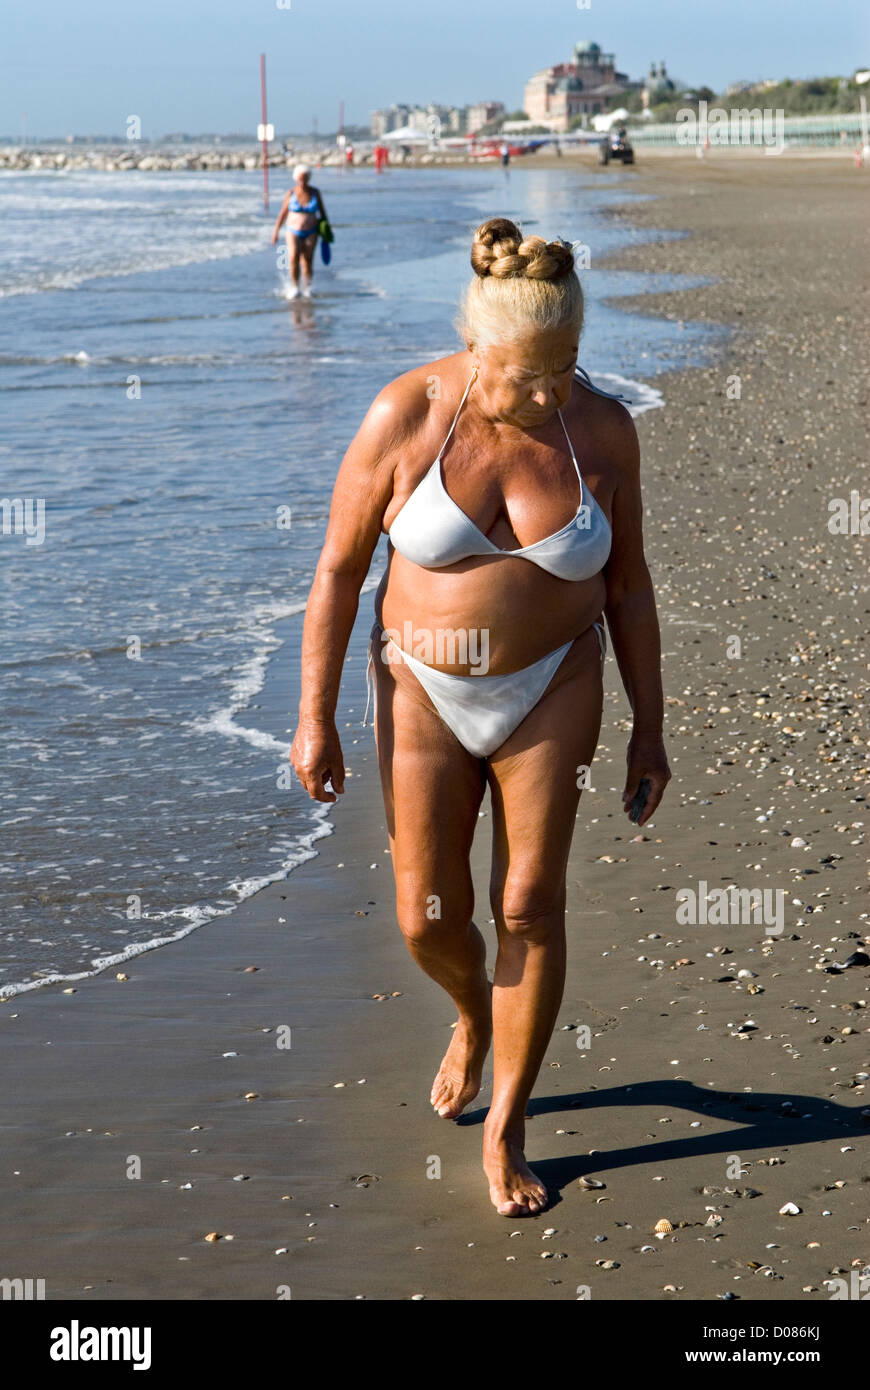 Reifen älteren Frauen gesund fit Körper tragen weiße bikini Venice Lido  Strand Italien 2000 s. HOMER SYKES Stockfotografie - Alamy